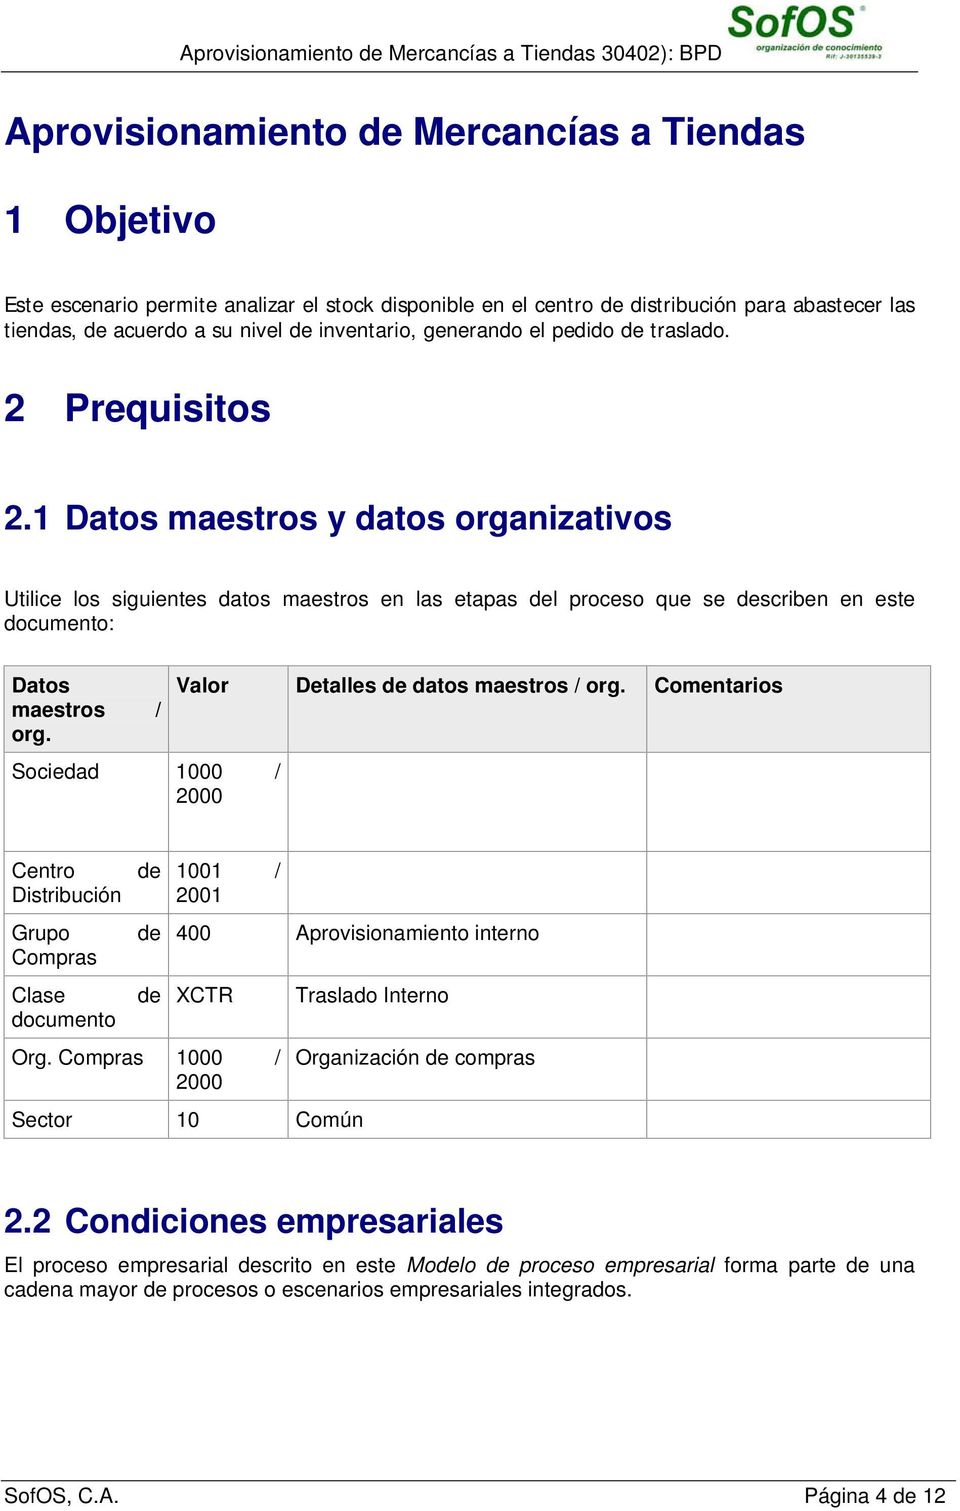 Sociedad 1000 / 2000 Valor Detalles datos maestros / org. Centro Grupo Compras Clase documento 1001 / 2001 400 Aprovisionamiento interno XCTR Org.